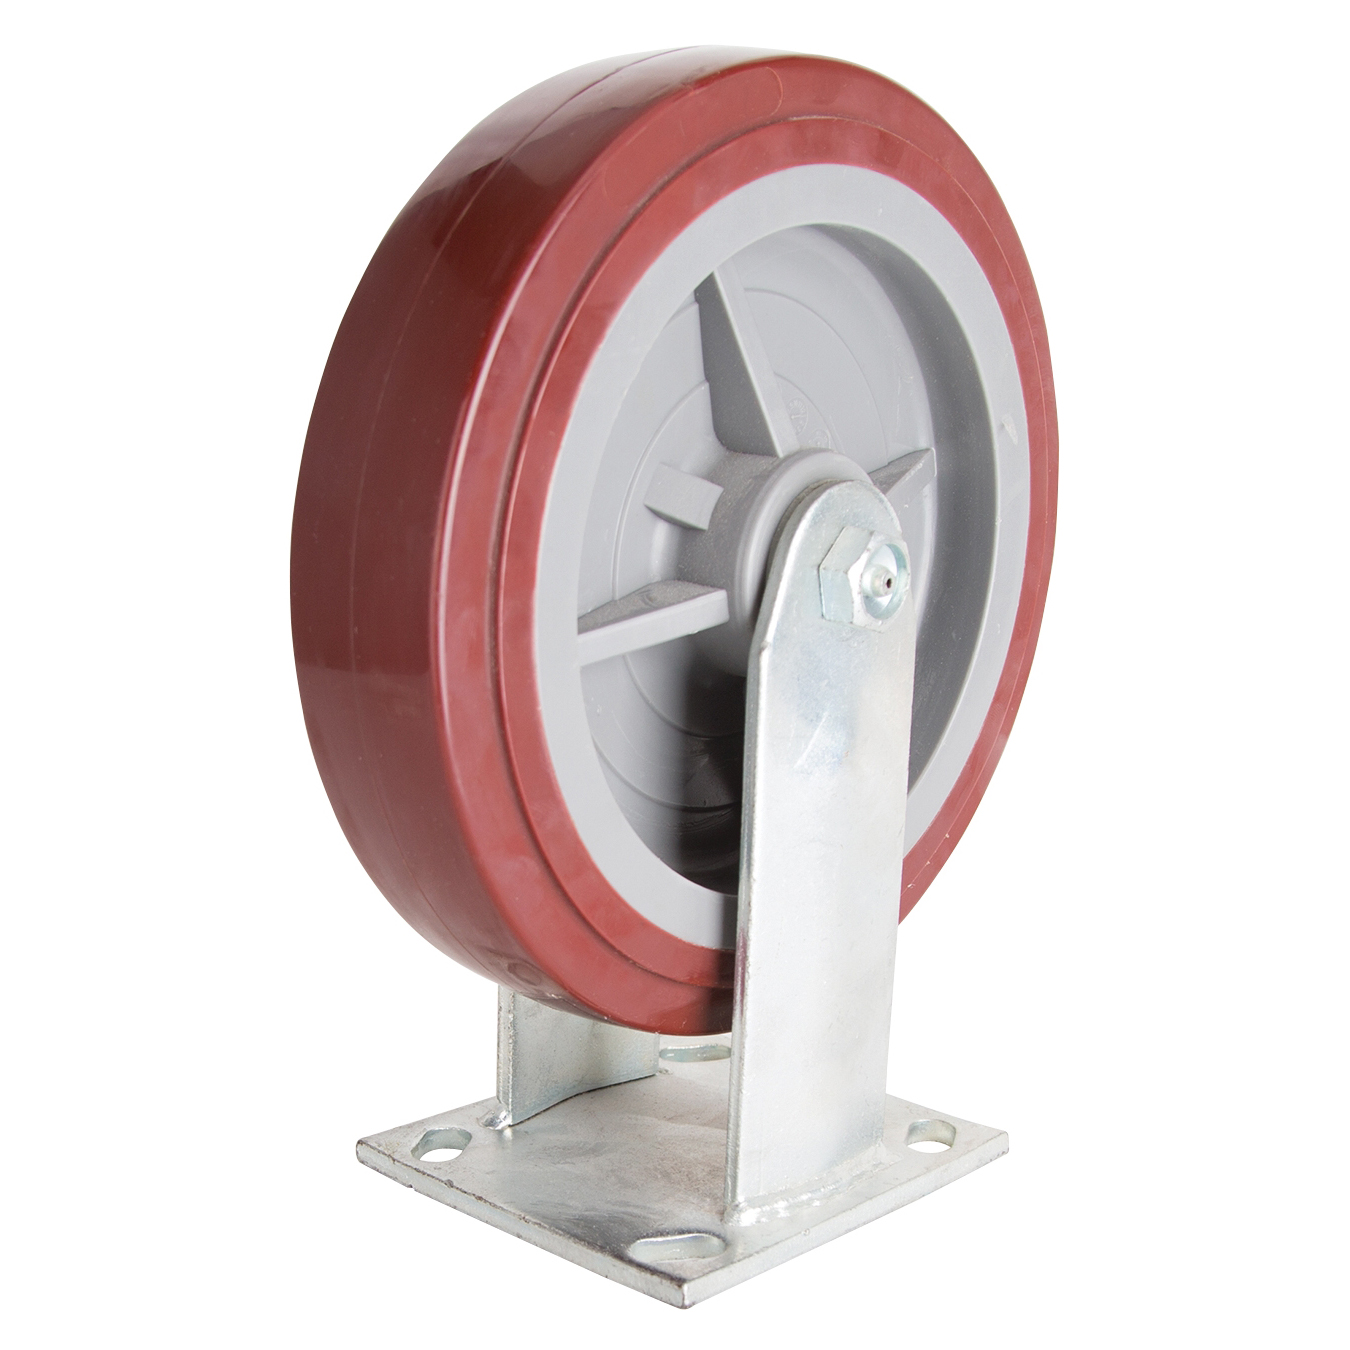 JC-P07 Rigid Caster, 8 in Dia Wheel, 2 in W Wheel, PU Wheel, Red, 750 lb, Steel Housing Material